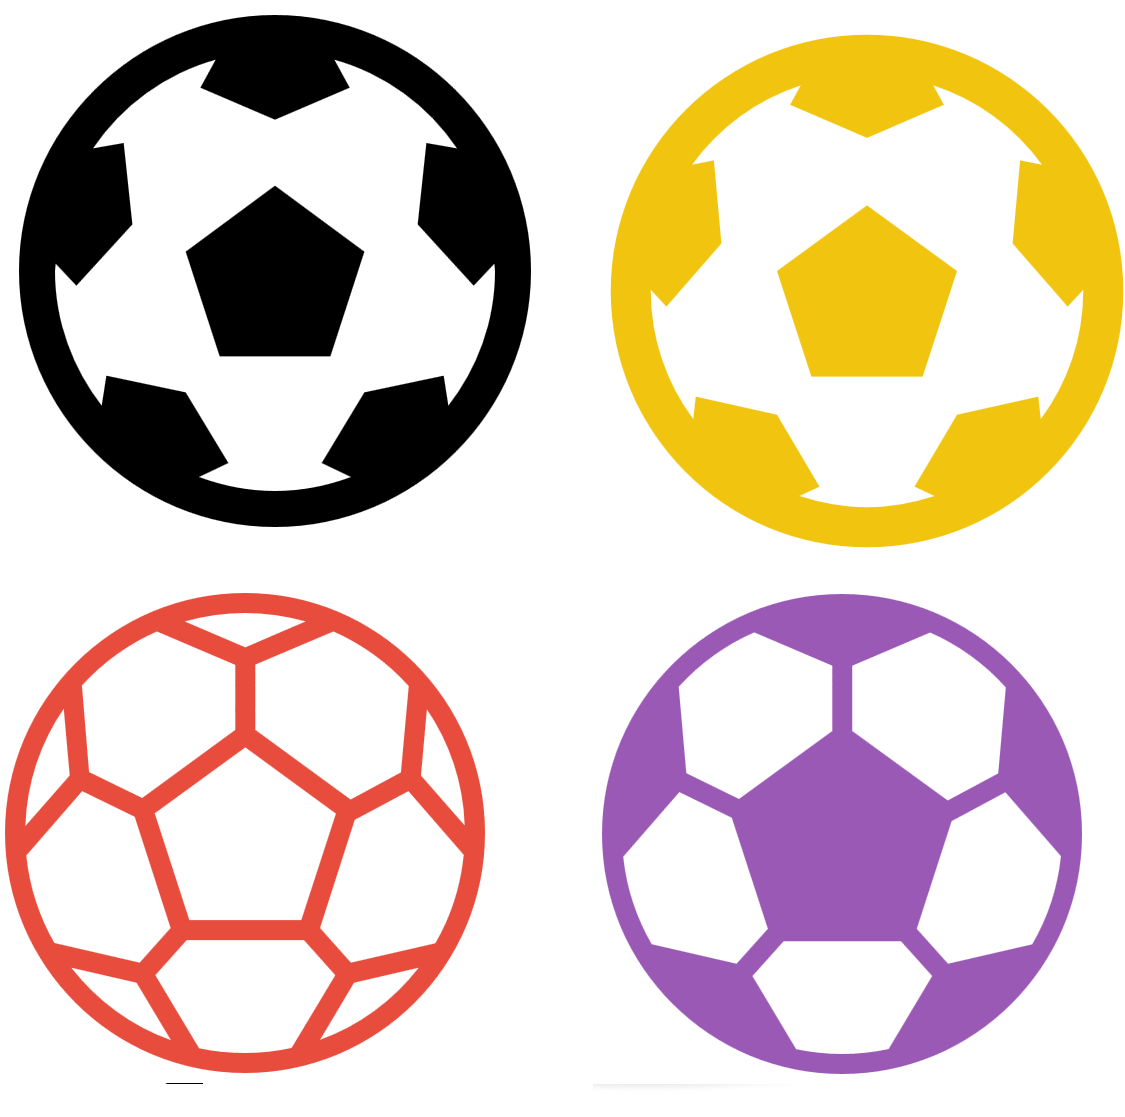 Football icons | Noun Project